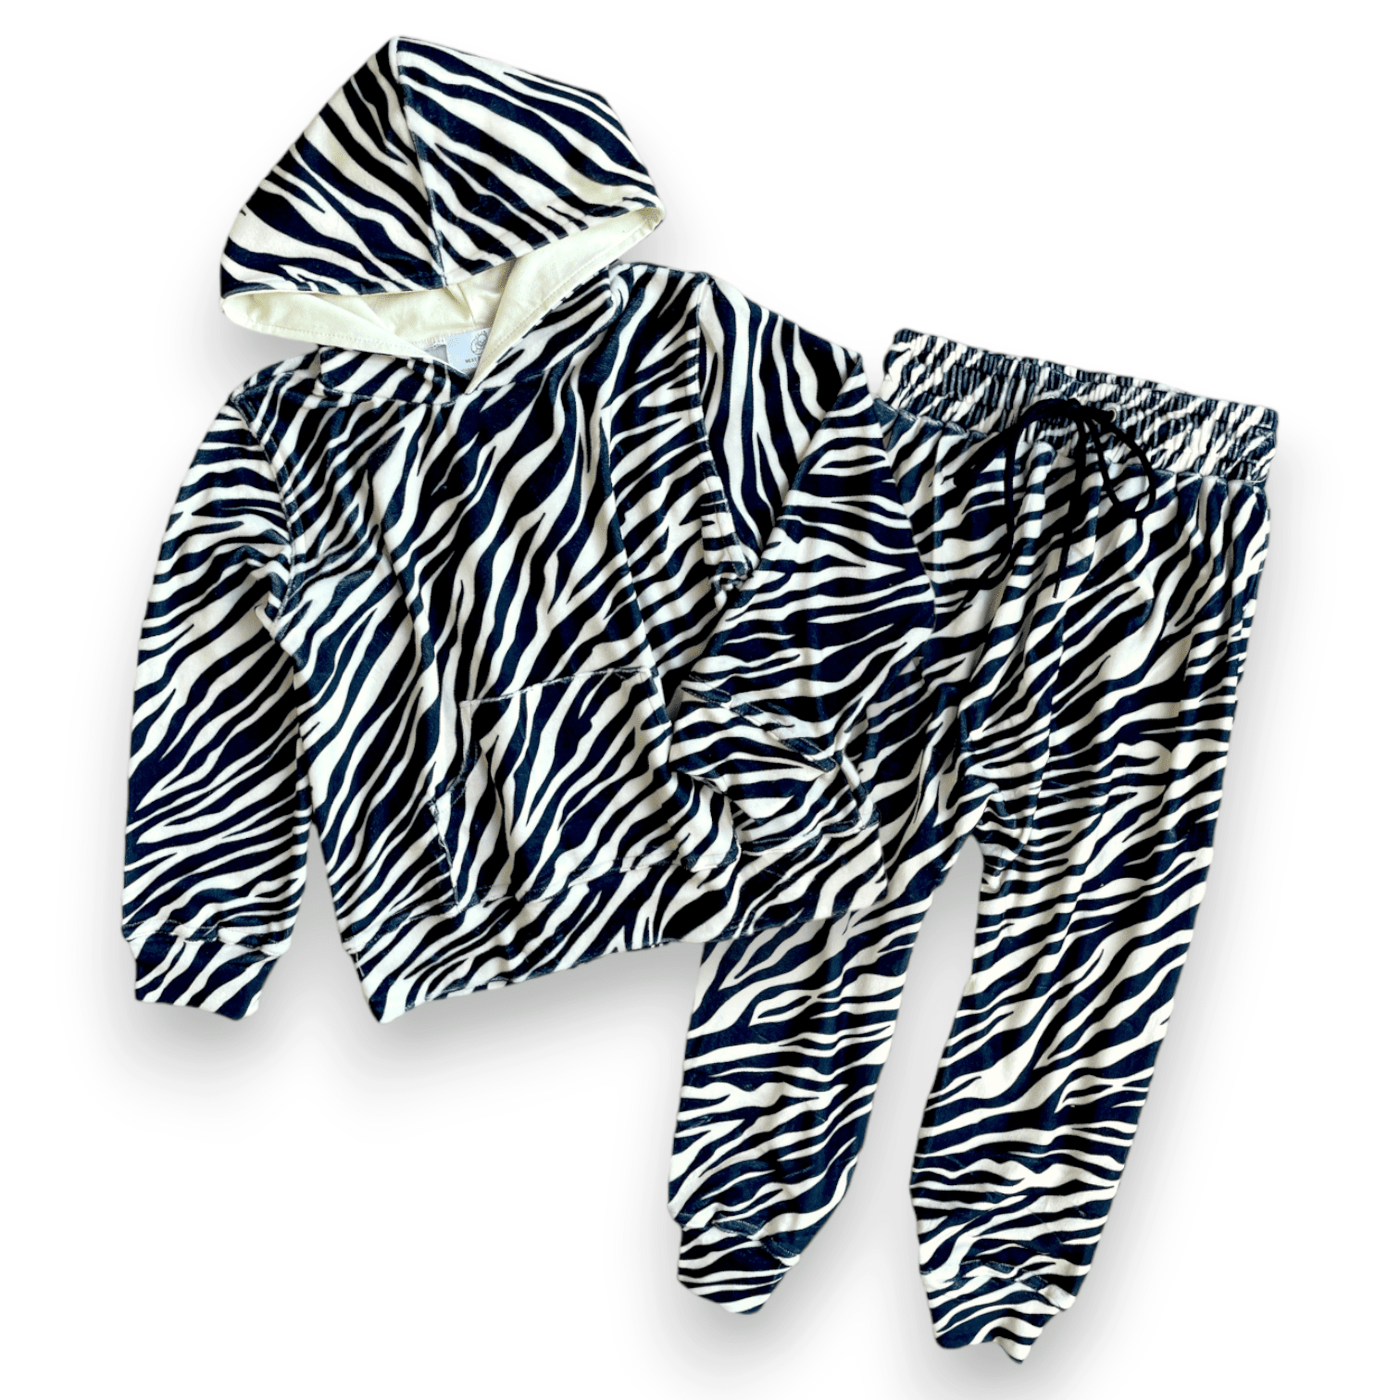 Best Day Ever Kids Baby & Toddler Outfits Zebra-Cadabra Velvet Leisure Set buy online boutique kids clothing